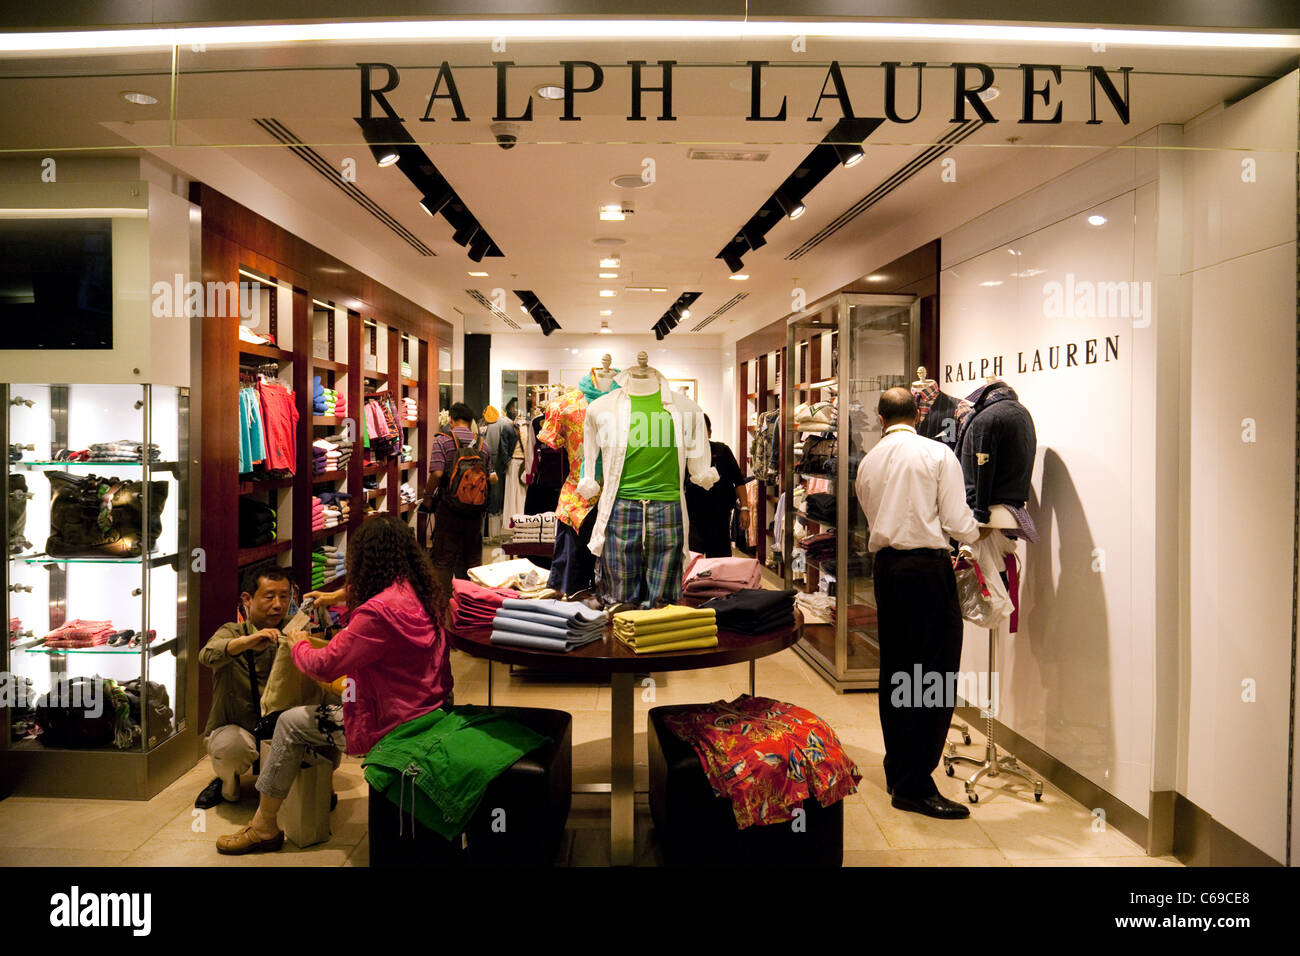 Ralph lauren store shop fotografías e imágenes de alta resolución - Alamy